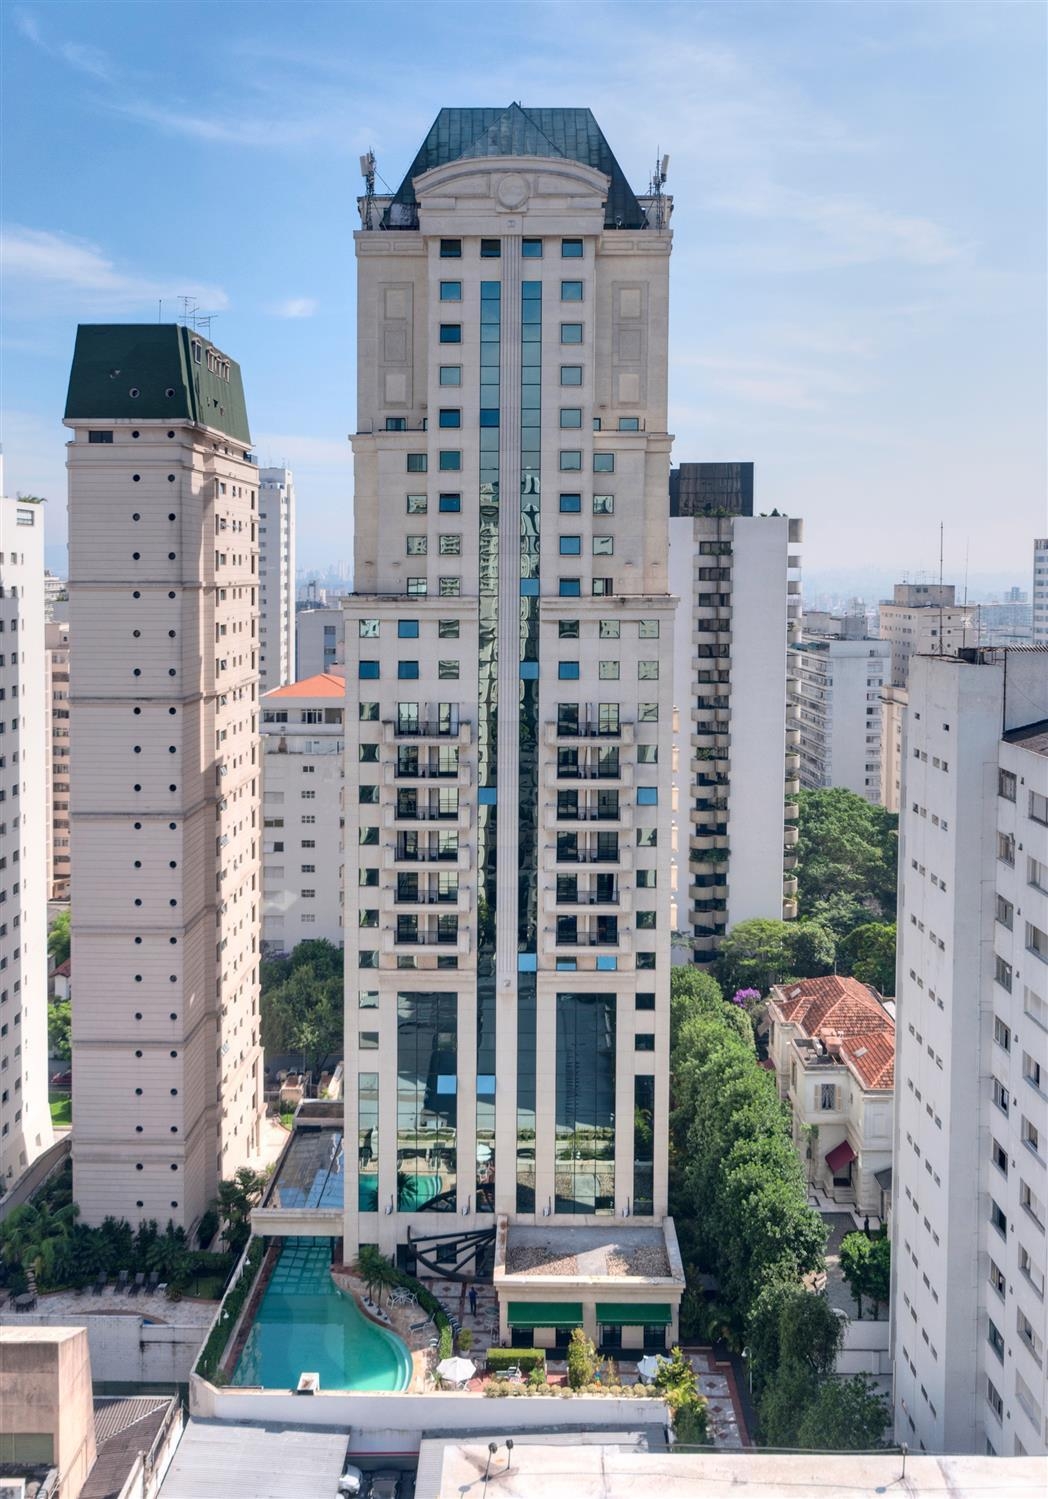 Quelle Heure Est Il à Sao Paulo Tryp Sao Paulo Higienopolis Hotel - São Paulo - HOTEL INFO